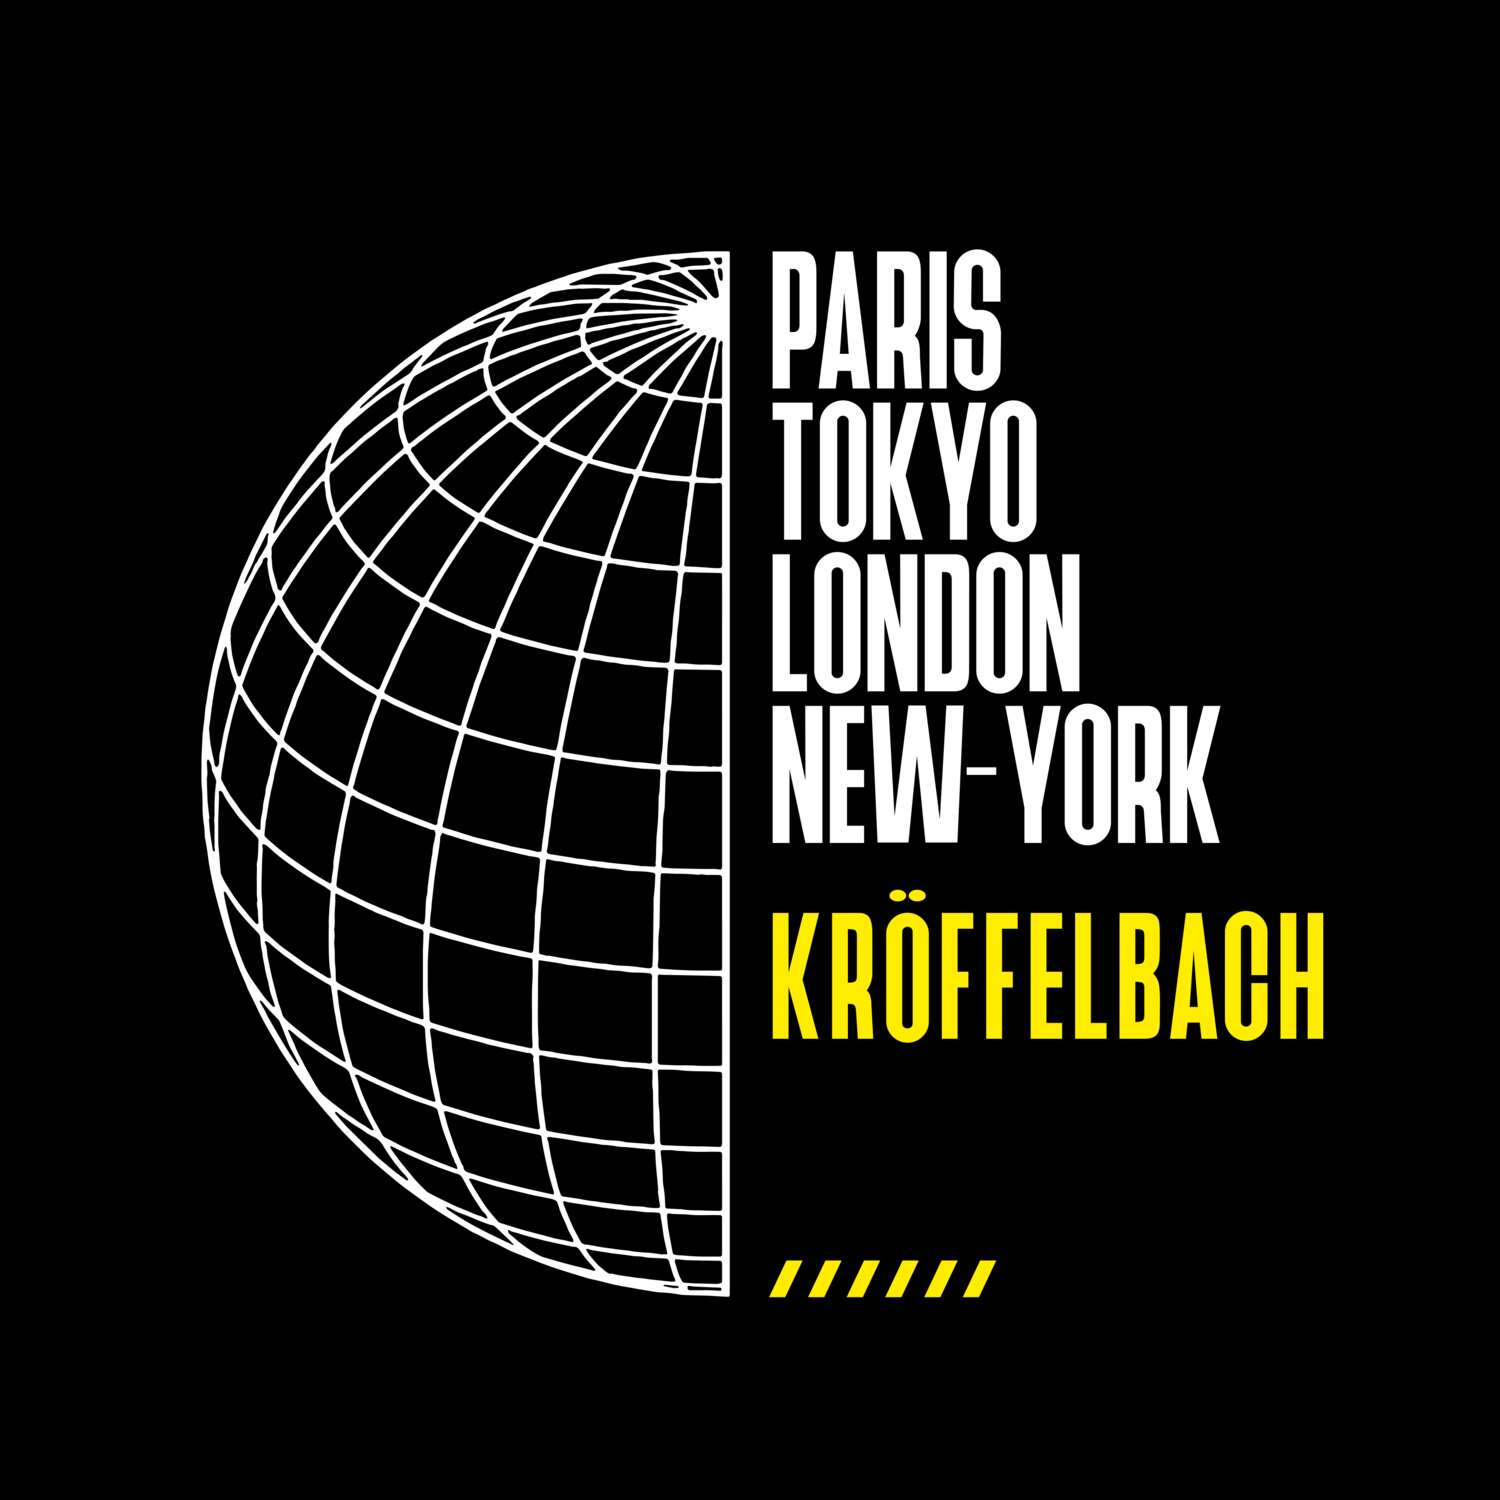 Kröffelbach T-Shirt »Paris Tokyo London«